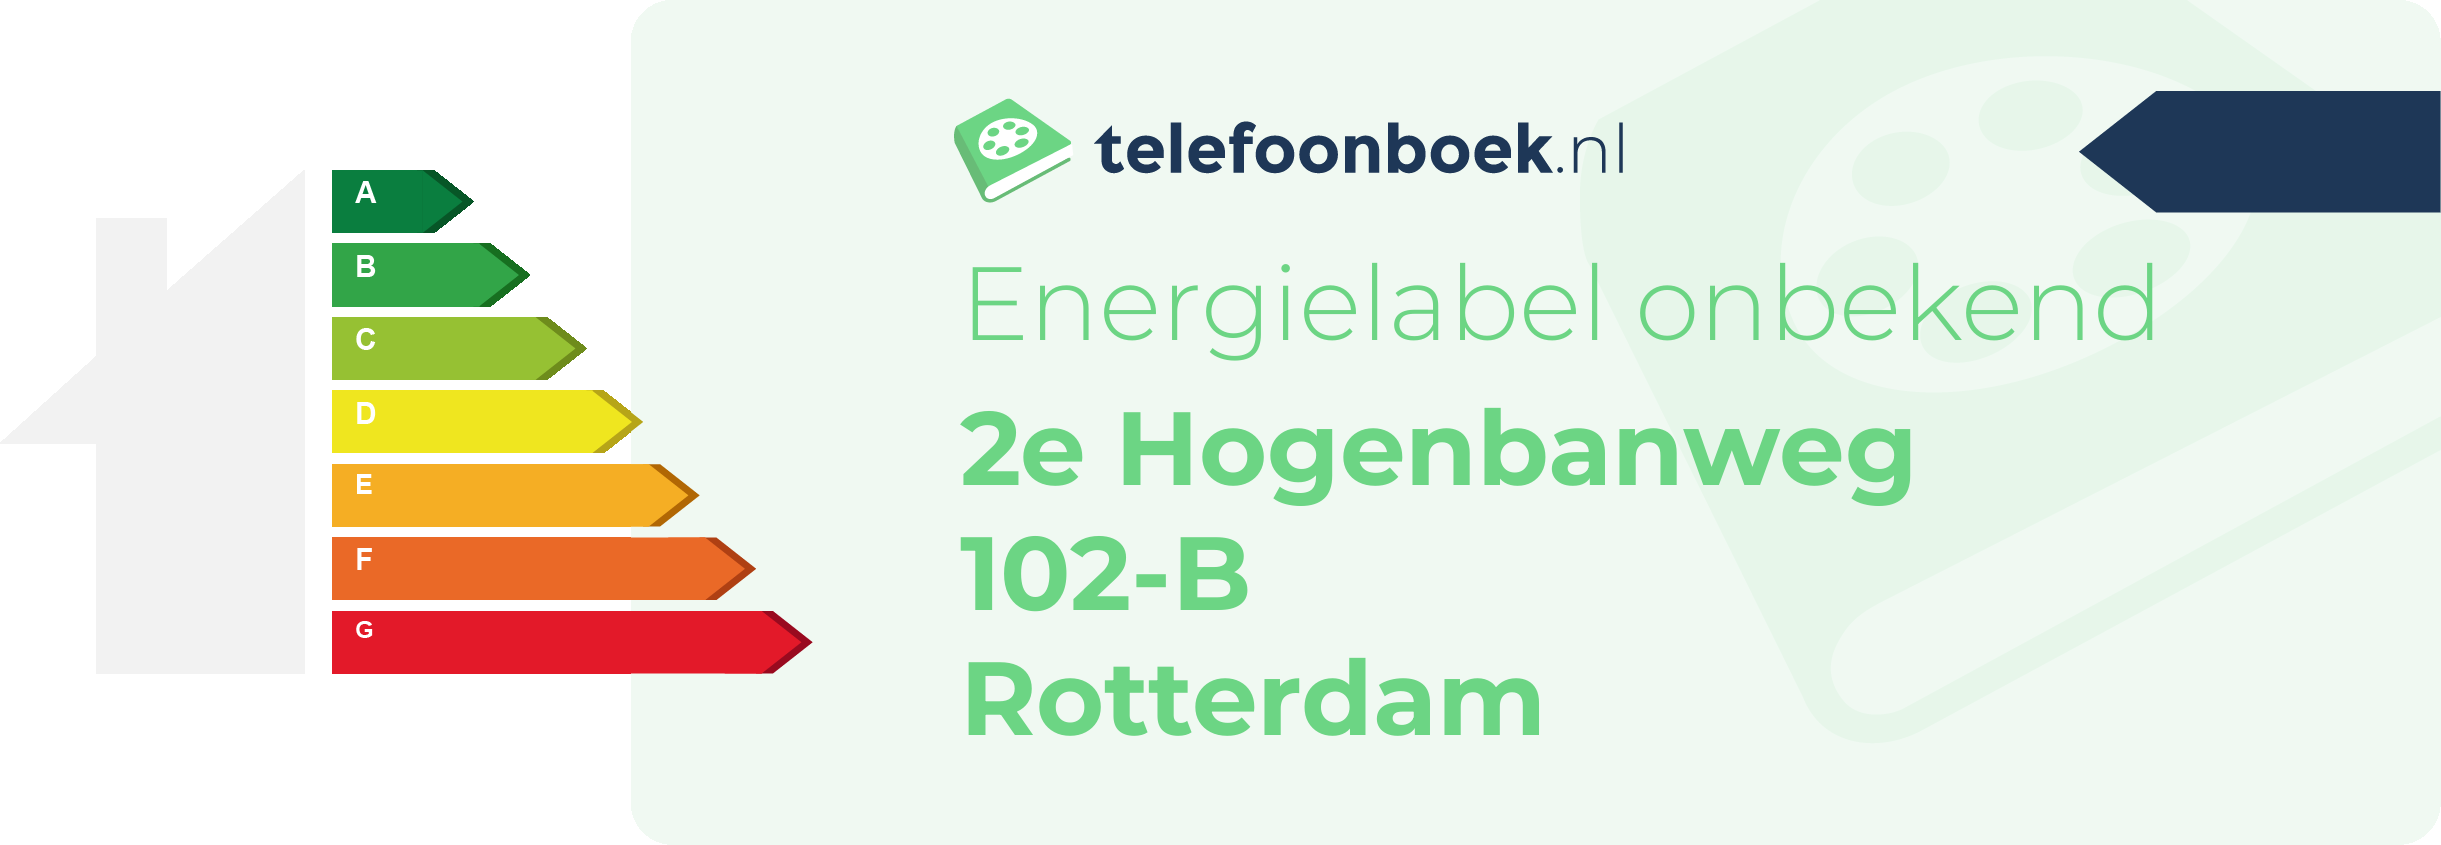 Energielabel 2e Hogenbanweg 102-B Rotterdam